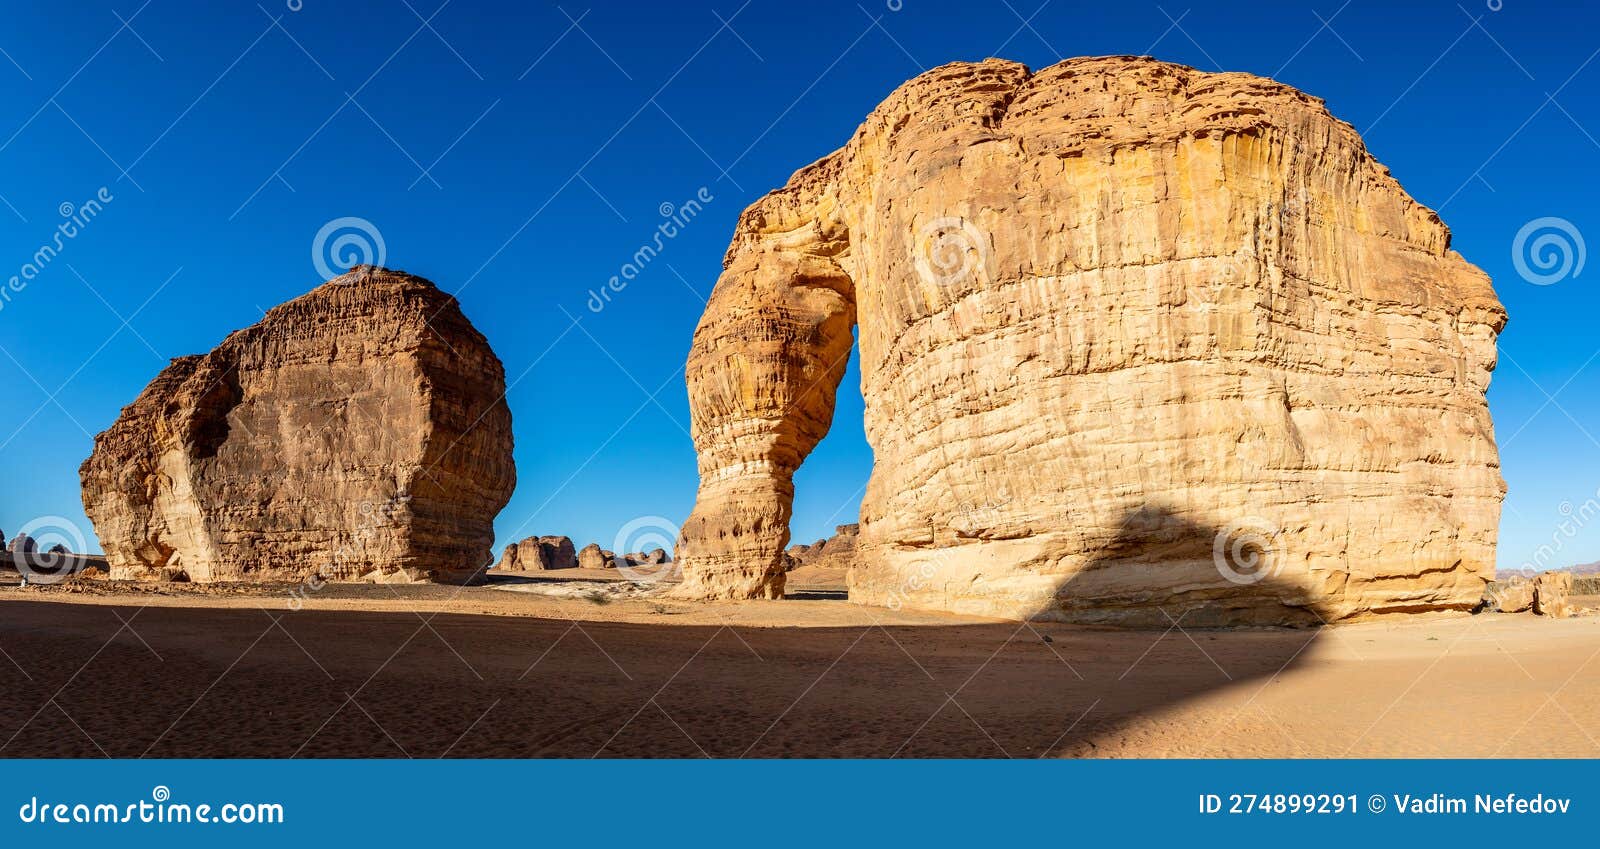 sandstone elephant rock erosion monolith standing in the desert, al ula, saudi arabia